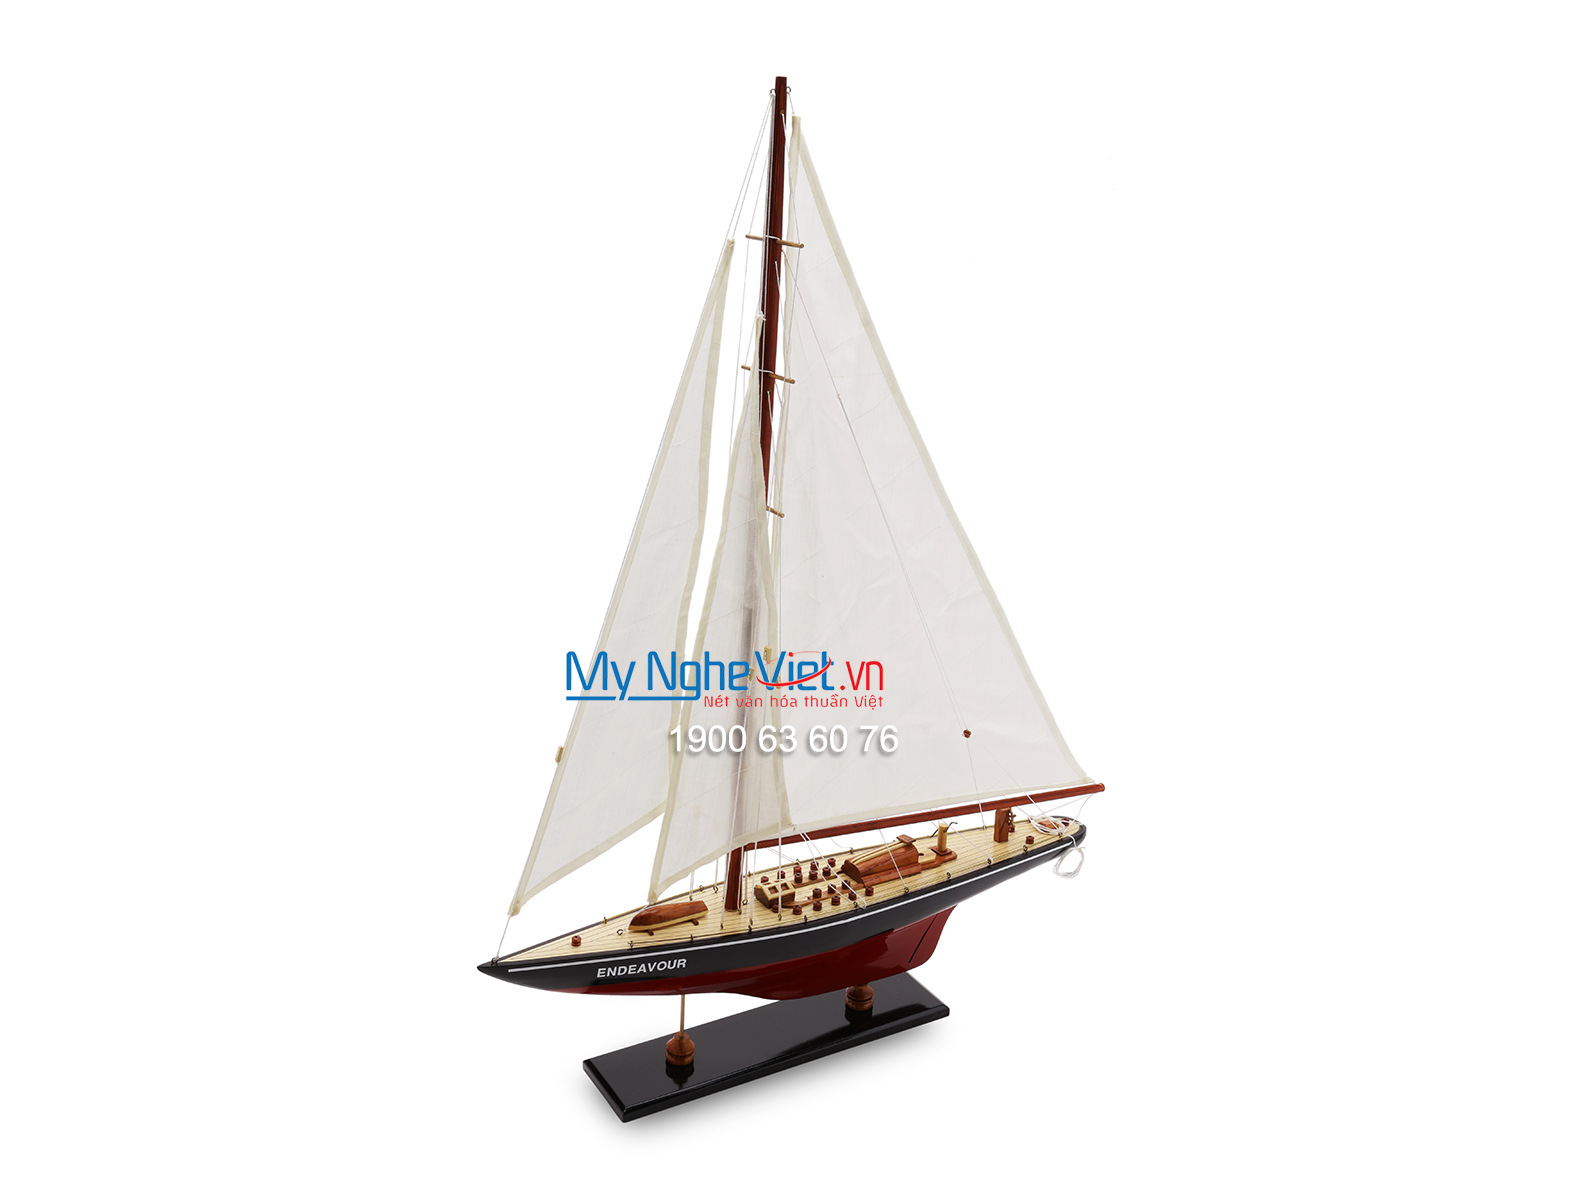 Endeavour Yacht Model - MNV-TB23/1